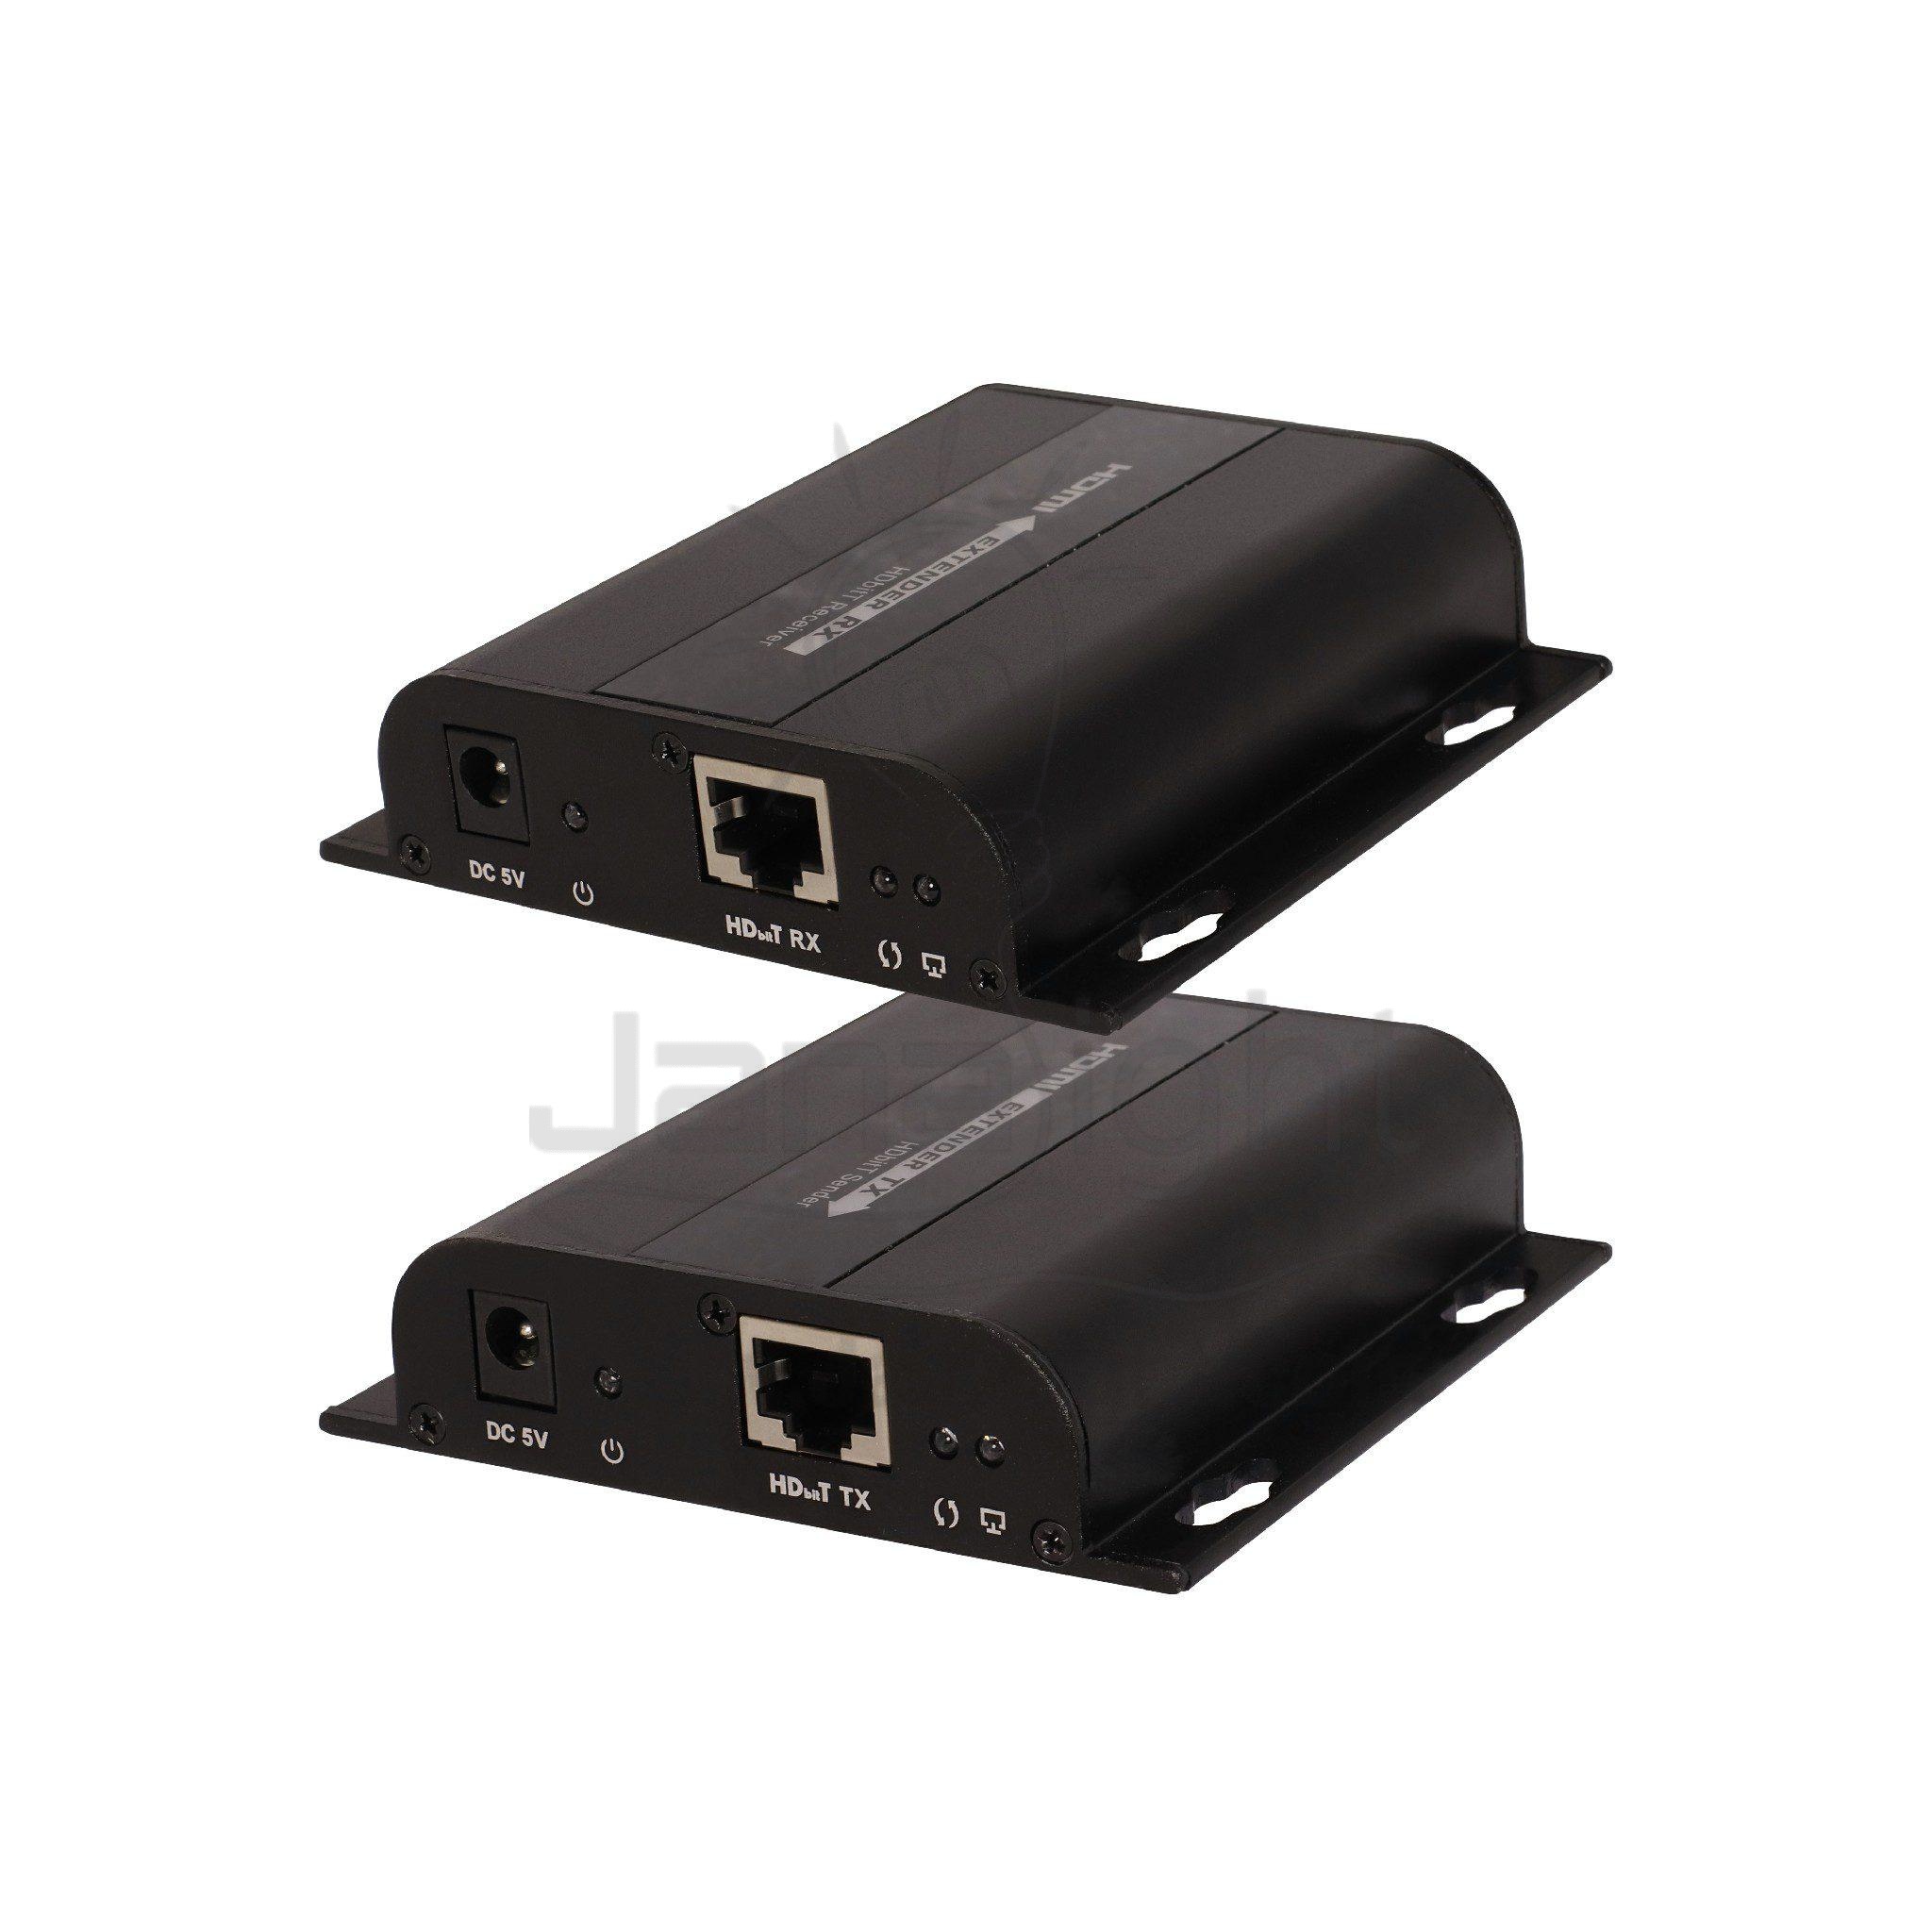 تحويلة من كبل شبكة الى HDMI مخرج عدد 1 حتى120 متر HDMI To Dual Port RJ45 Network Cable to 120m